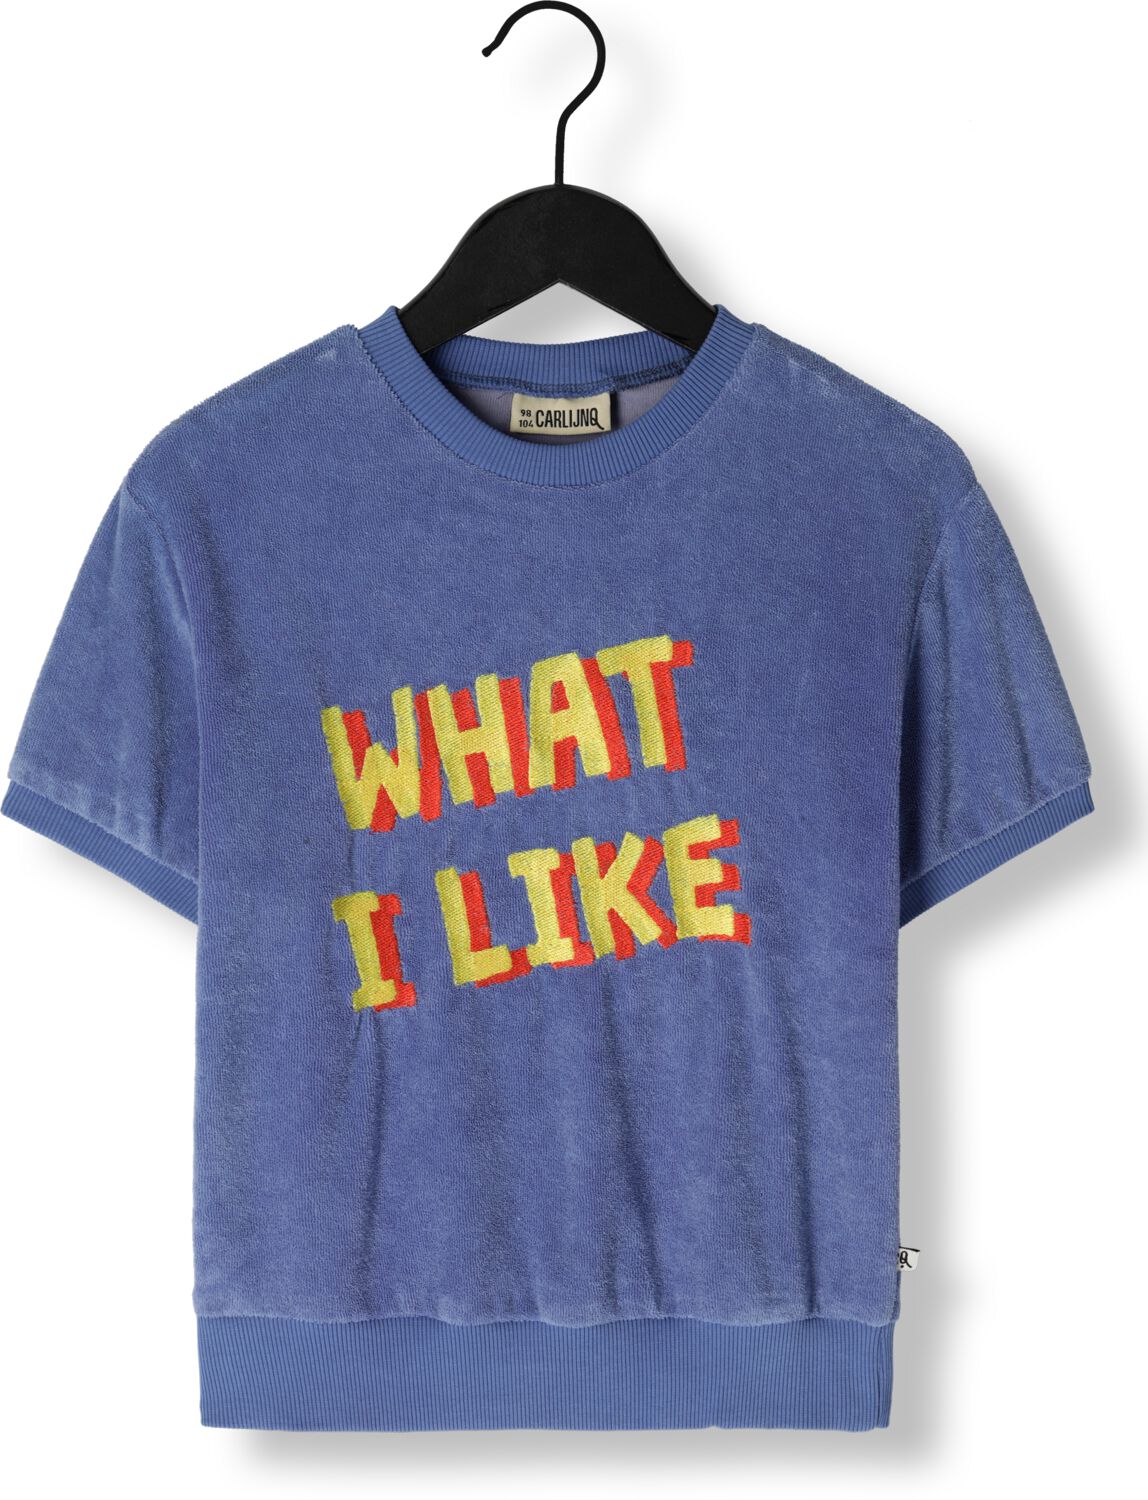 CARLIJNQ Jongens Polo's & T-shirts What I Like Sweaterr Short Sleev E With Embroidery Blauw